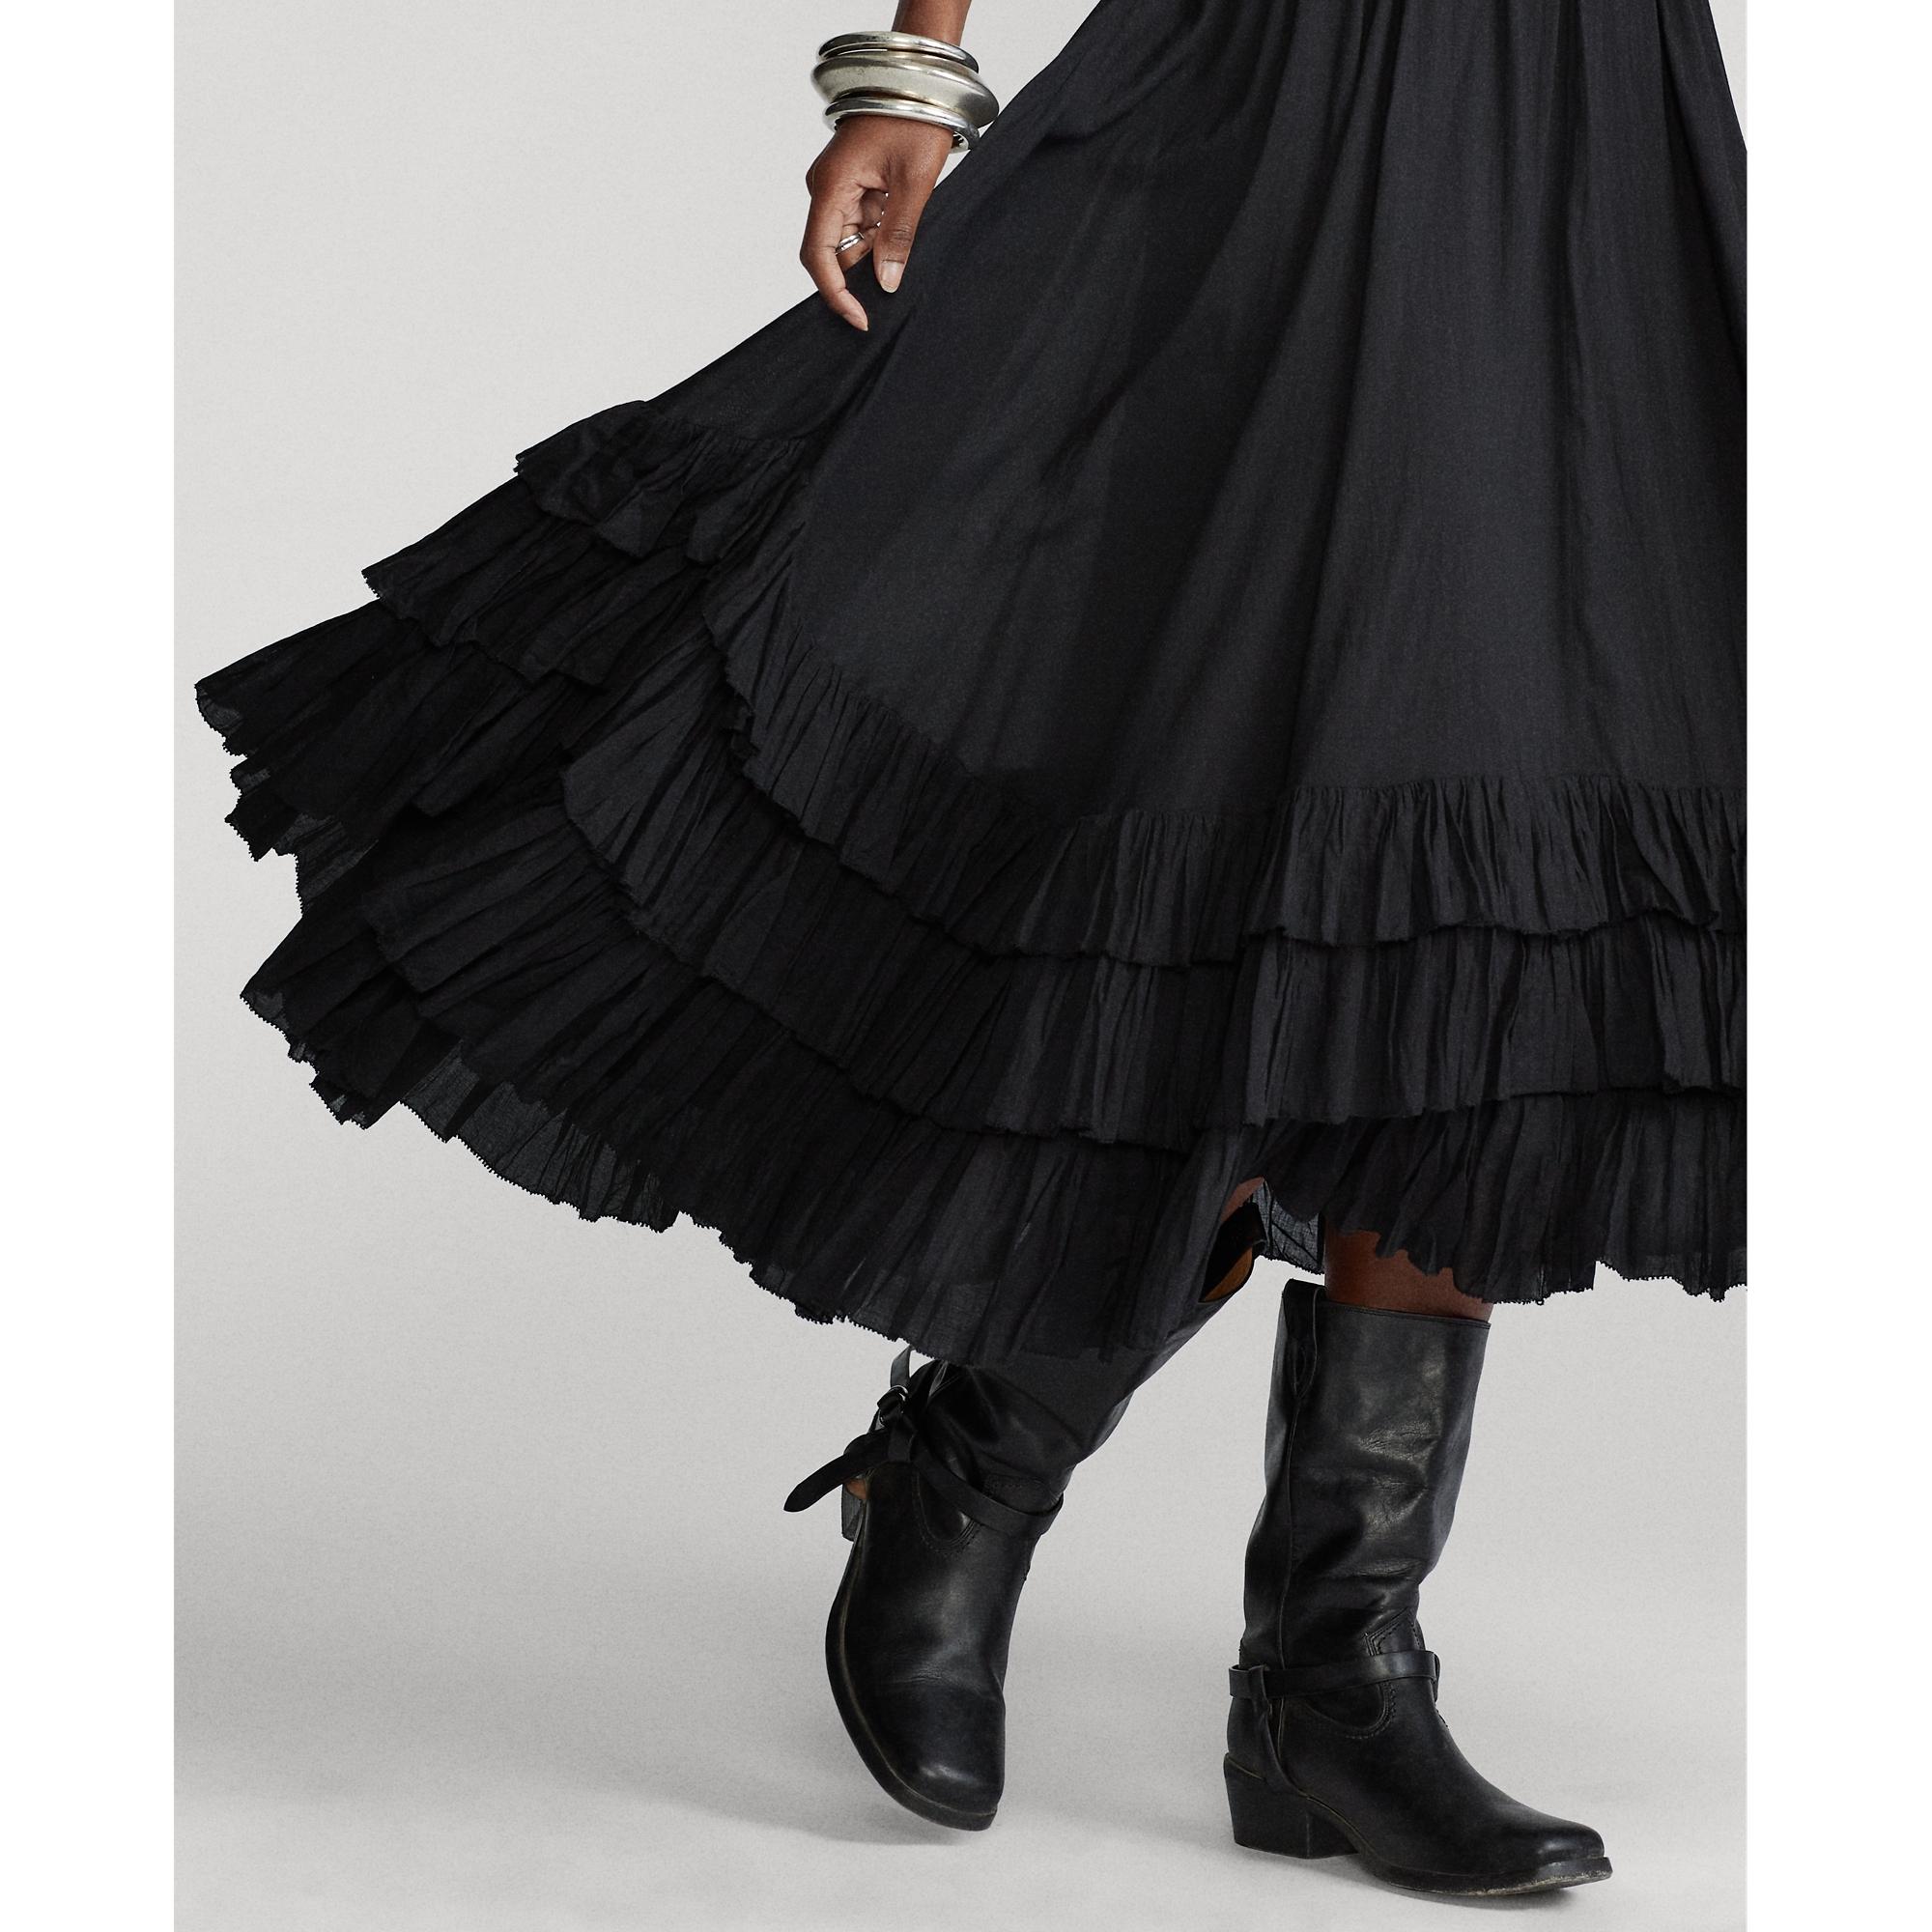 Polo Ralph Lauren Ruffle-trim Cotton Voile Skirt in Black | Lyst